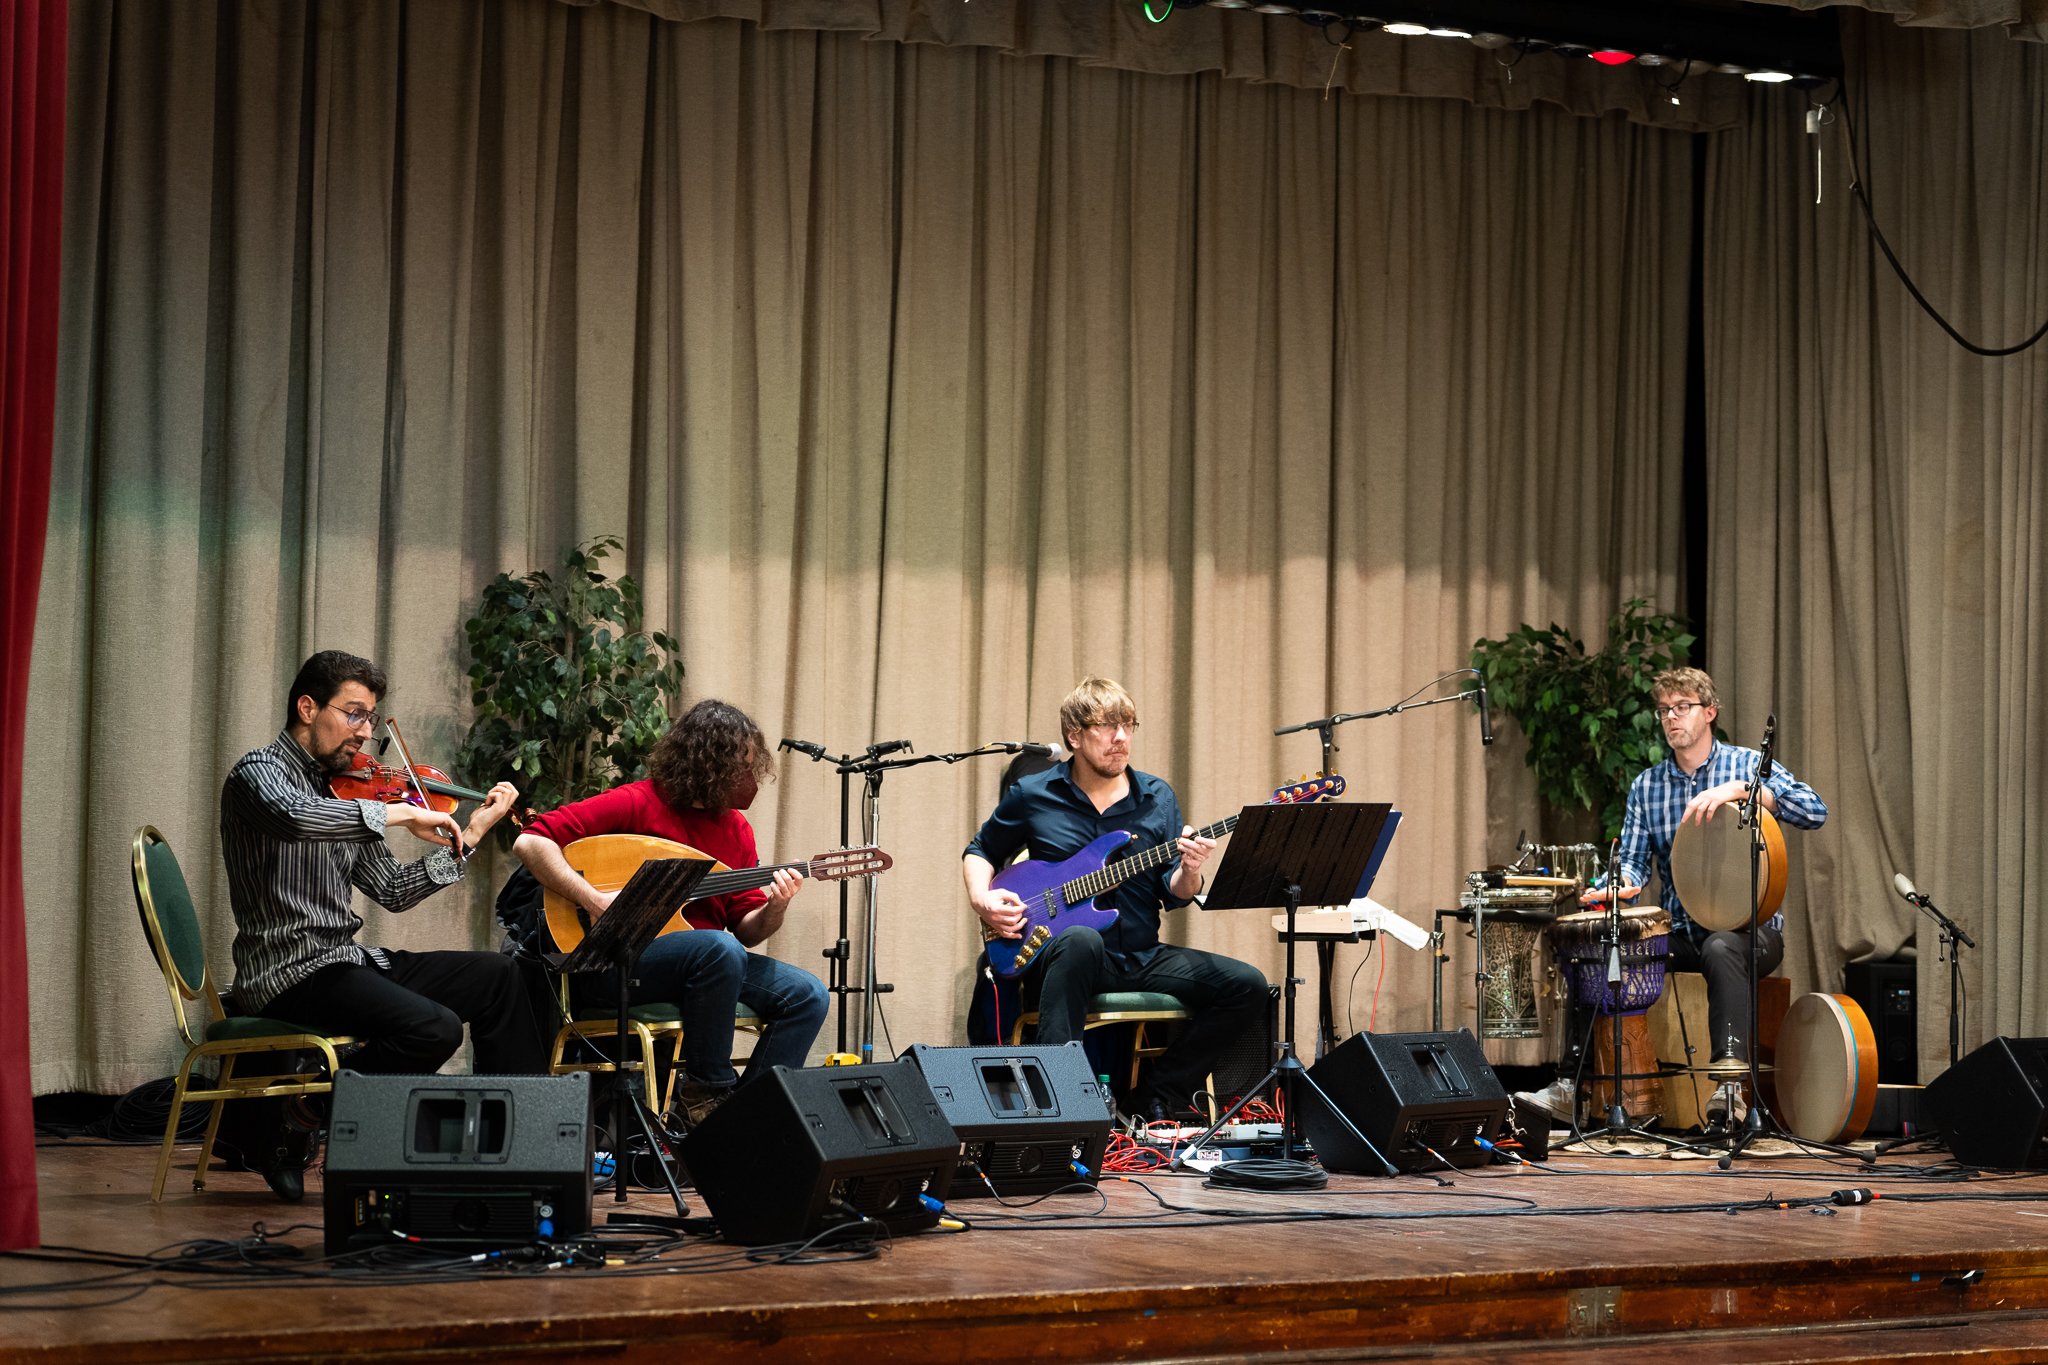 Dave Sharp Worlds Quartet performs at the International Institute